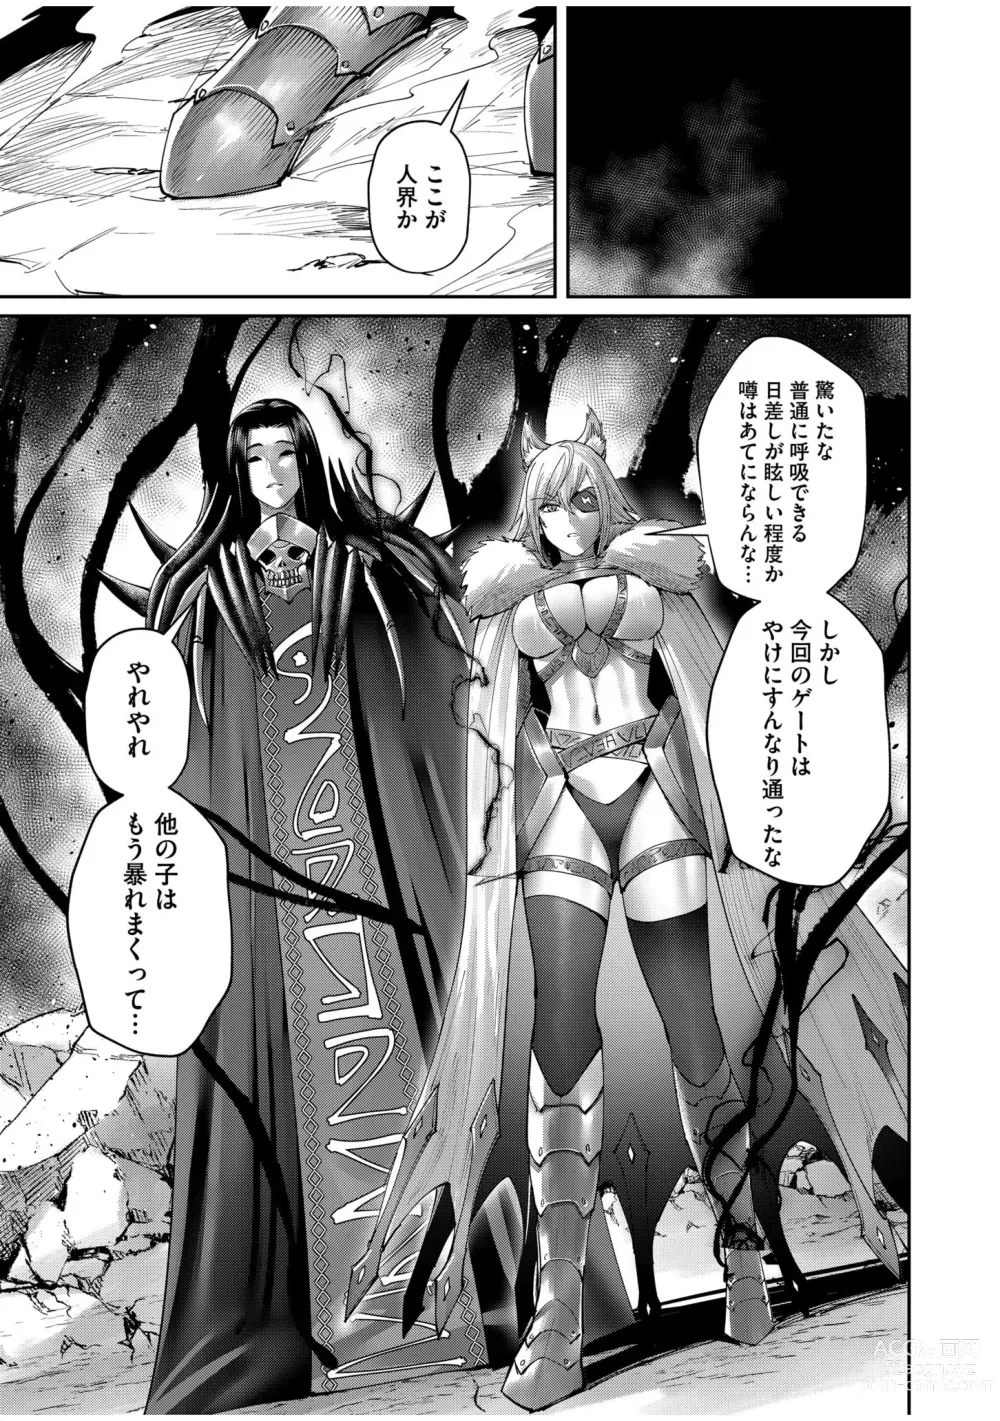 Page 157 of manga Kichiku Eiyuu Vol.07